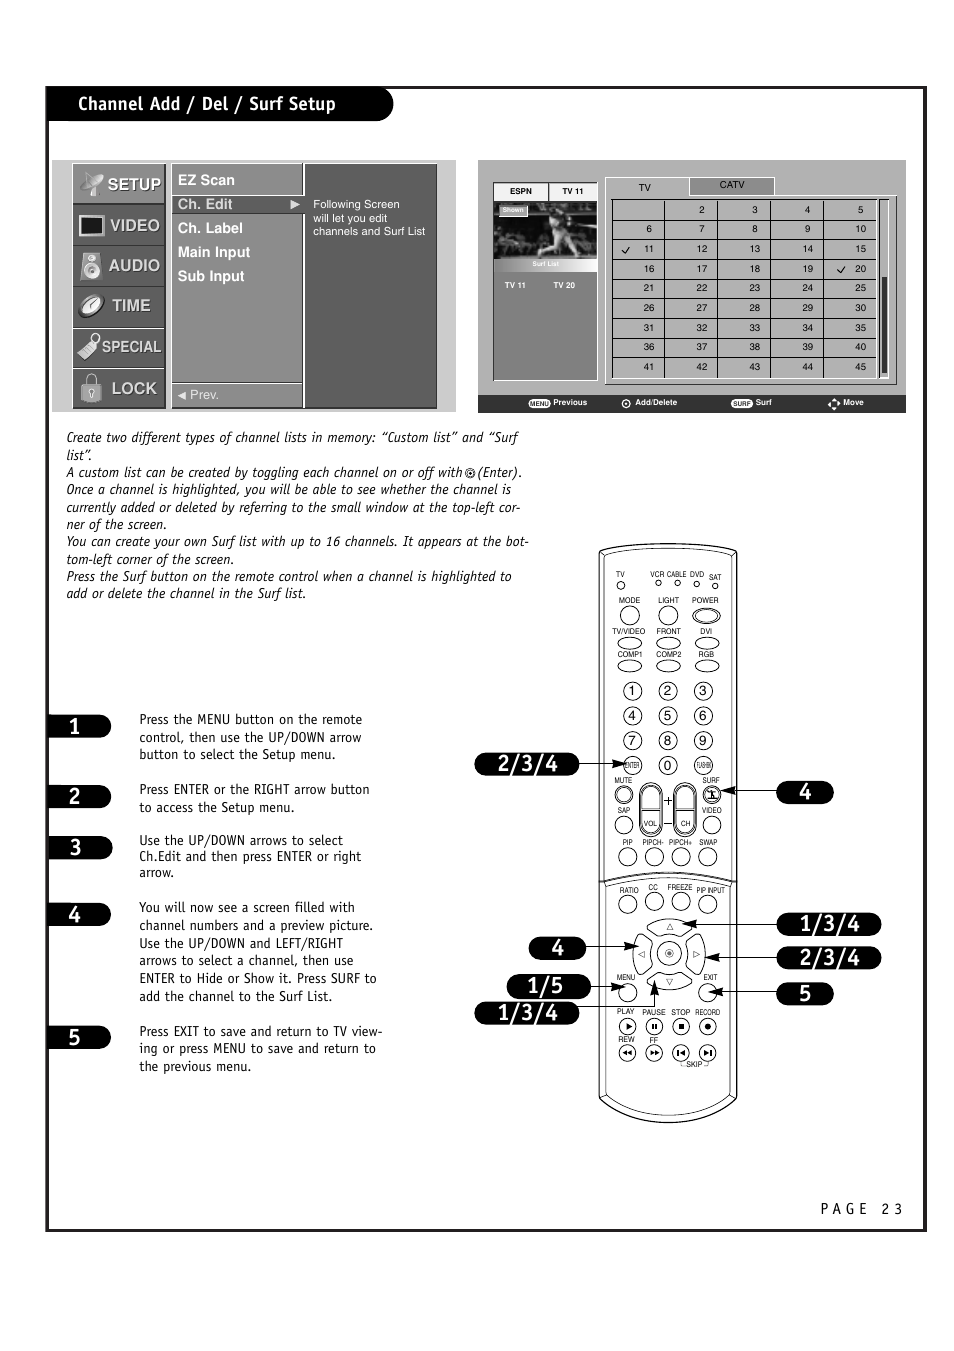 Channel add / del / surf setup, Setup, Setup video video audio audio lock lock | Time, Special | LG RU-52SZ61D User Manual | Page 23 / 60